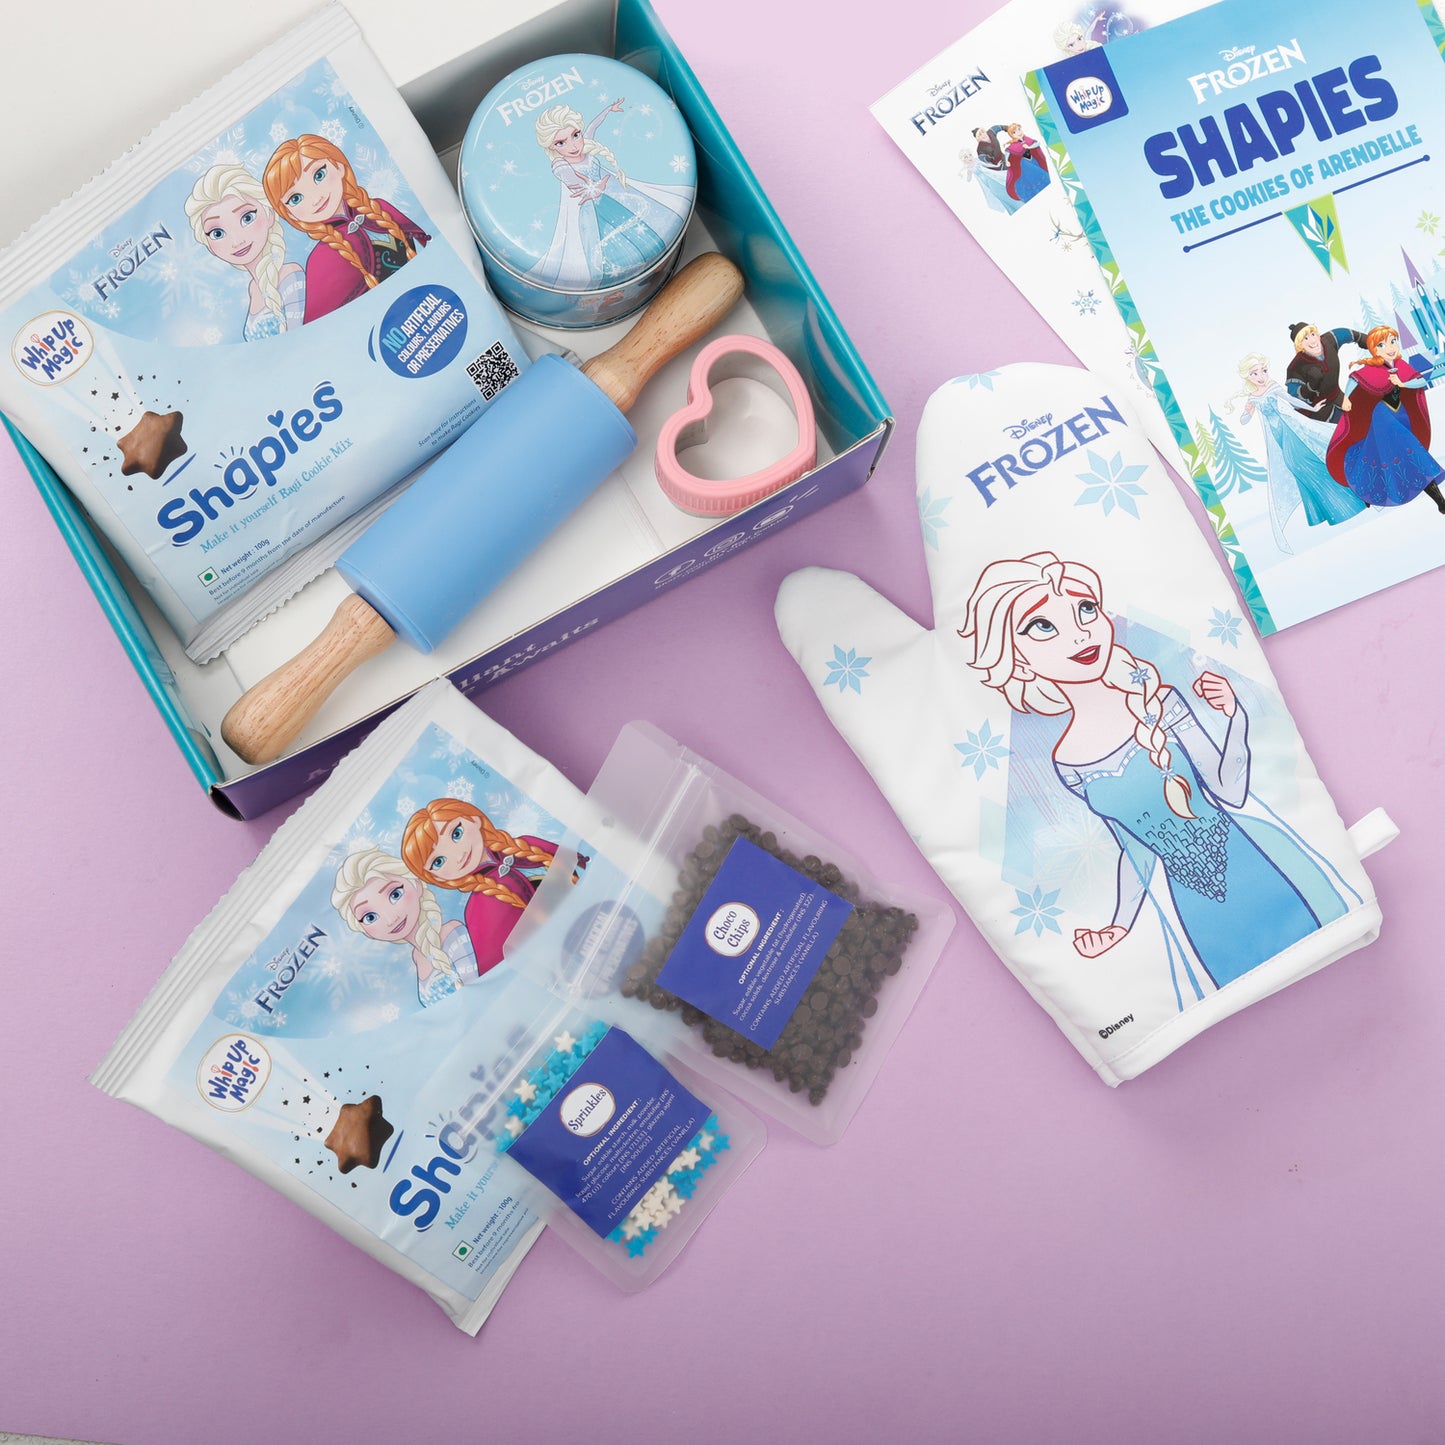 Disney Frozen - Shapies Ragi Cookie Kit WhipUpMagic